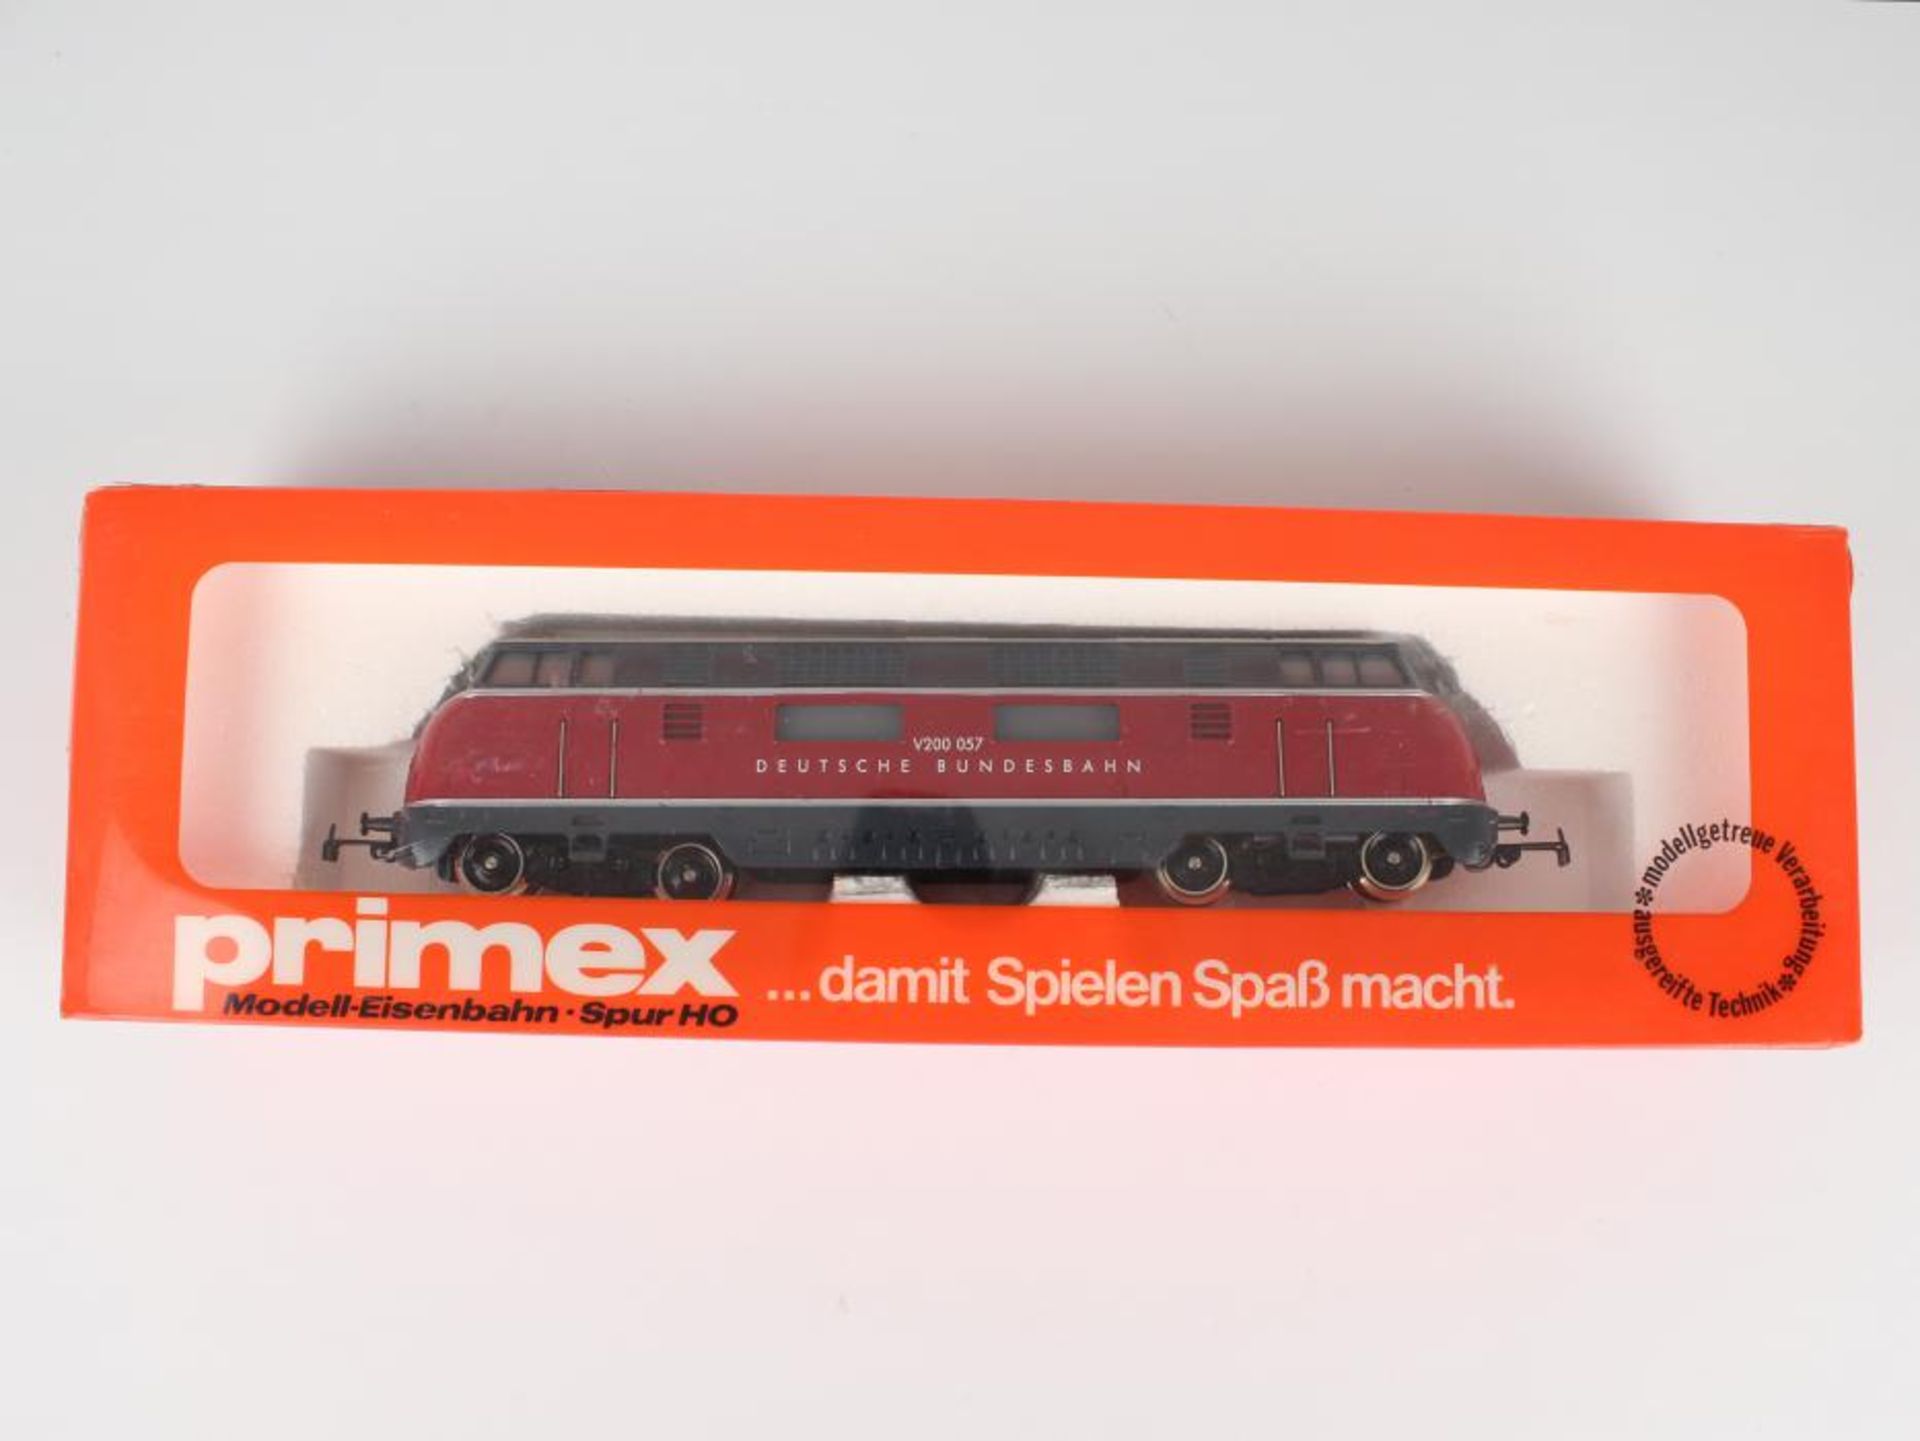 Märklin - EisenbahnPrimex 3009, H0, Diesellok, V 200 057 DB, rot-schwarz, OK, unbesp.